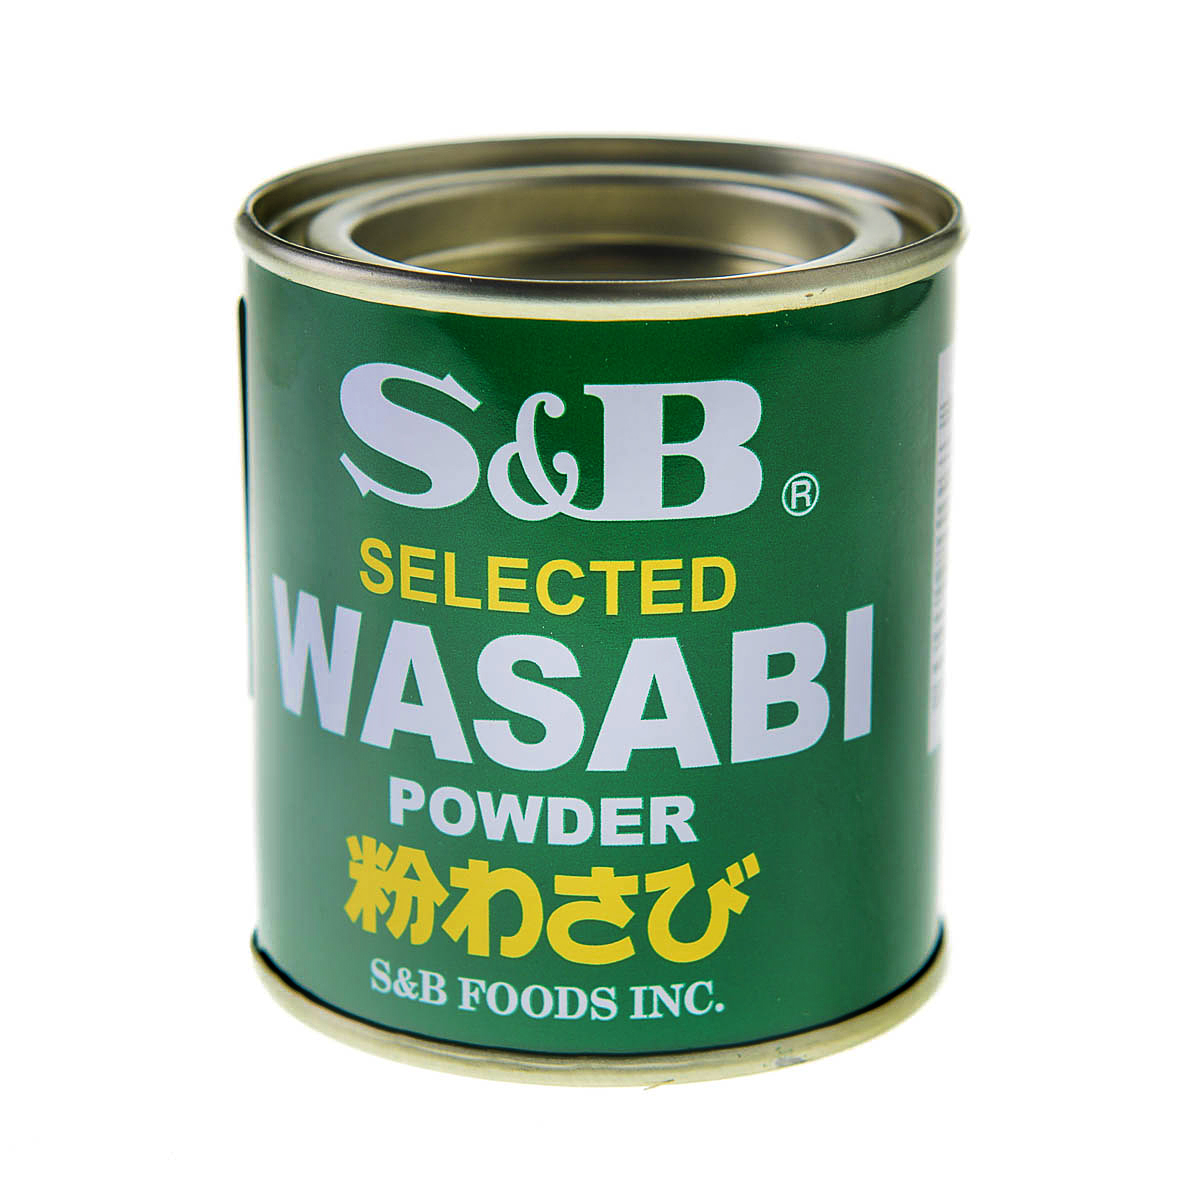 Condimente - Pudra wasabi S&B 30g, asianfood.ro